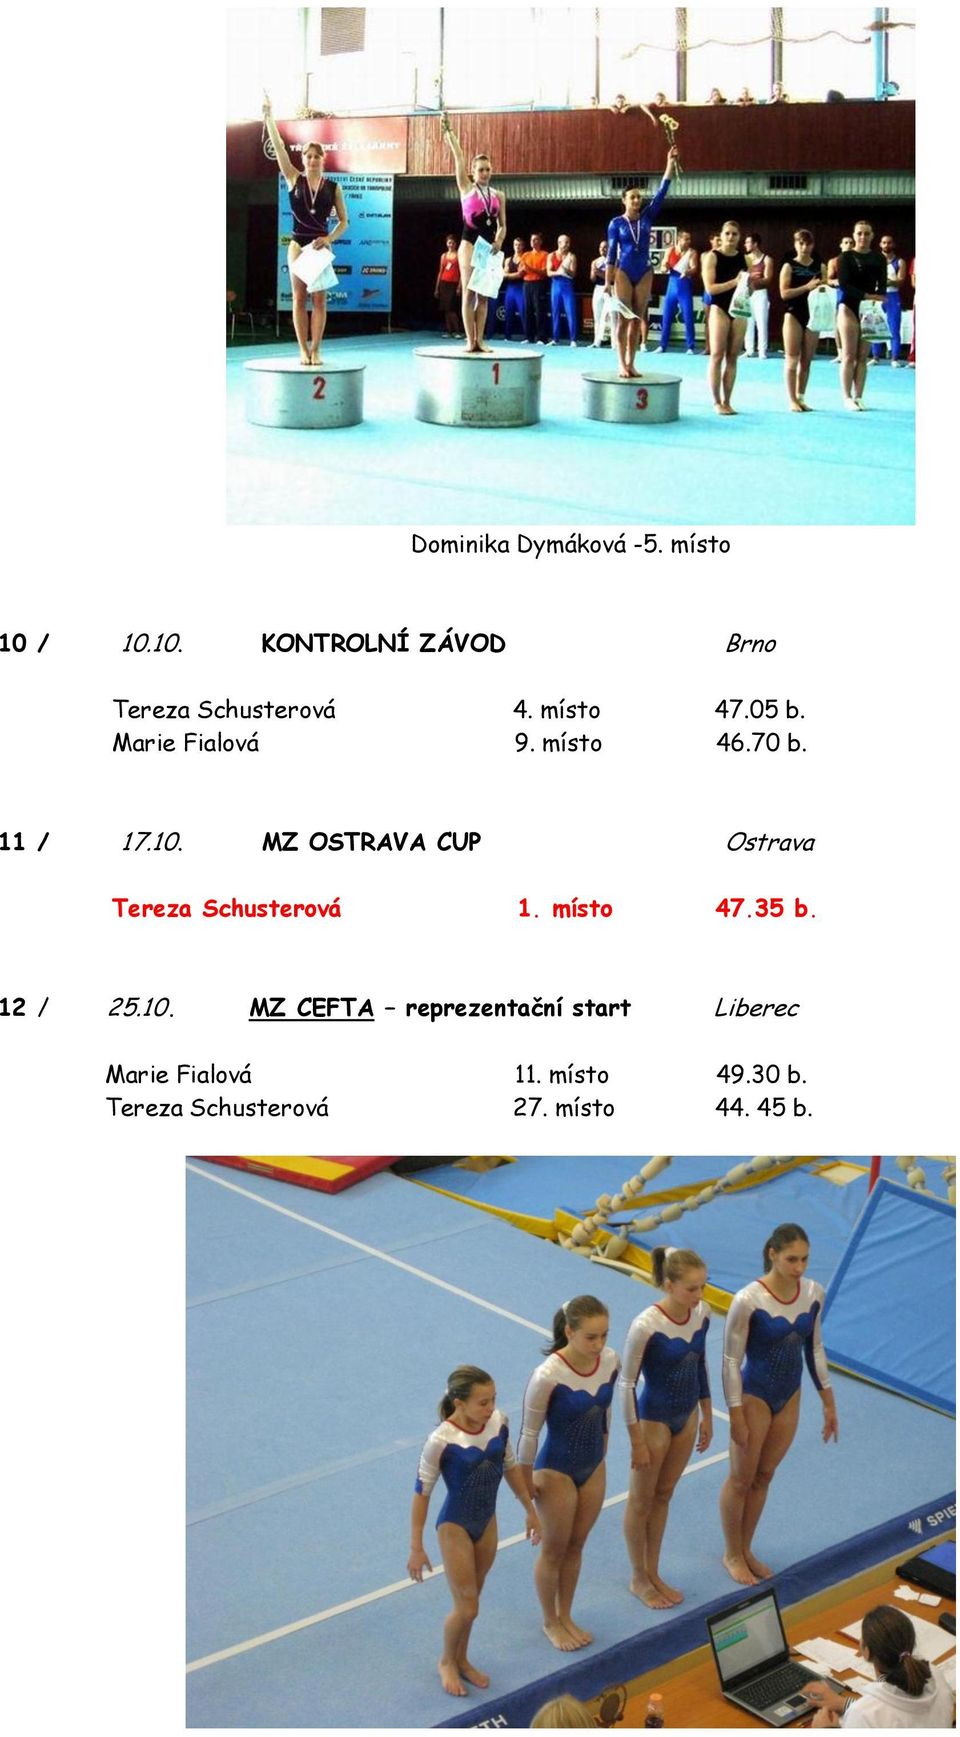 MZ OSTRAVA CUP Ostrava Tereza Schusterová 1. místo 47.35 b. 12 / 25.10.